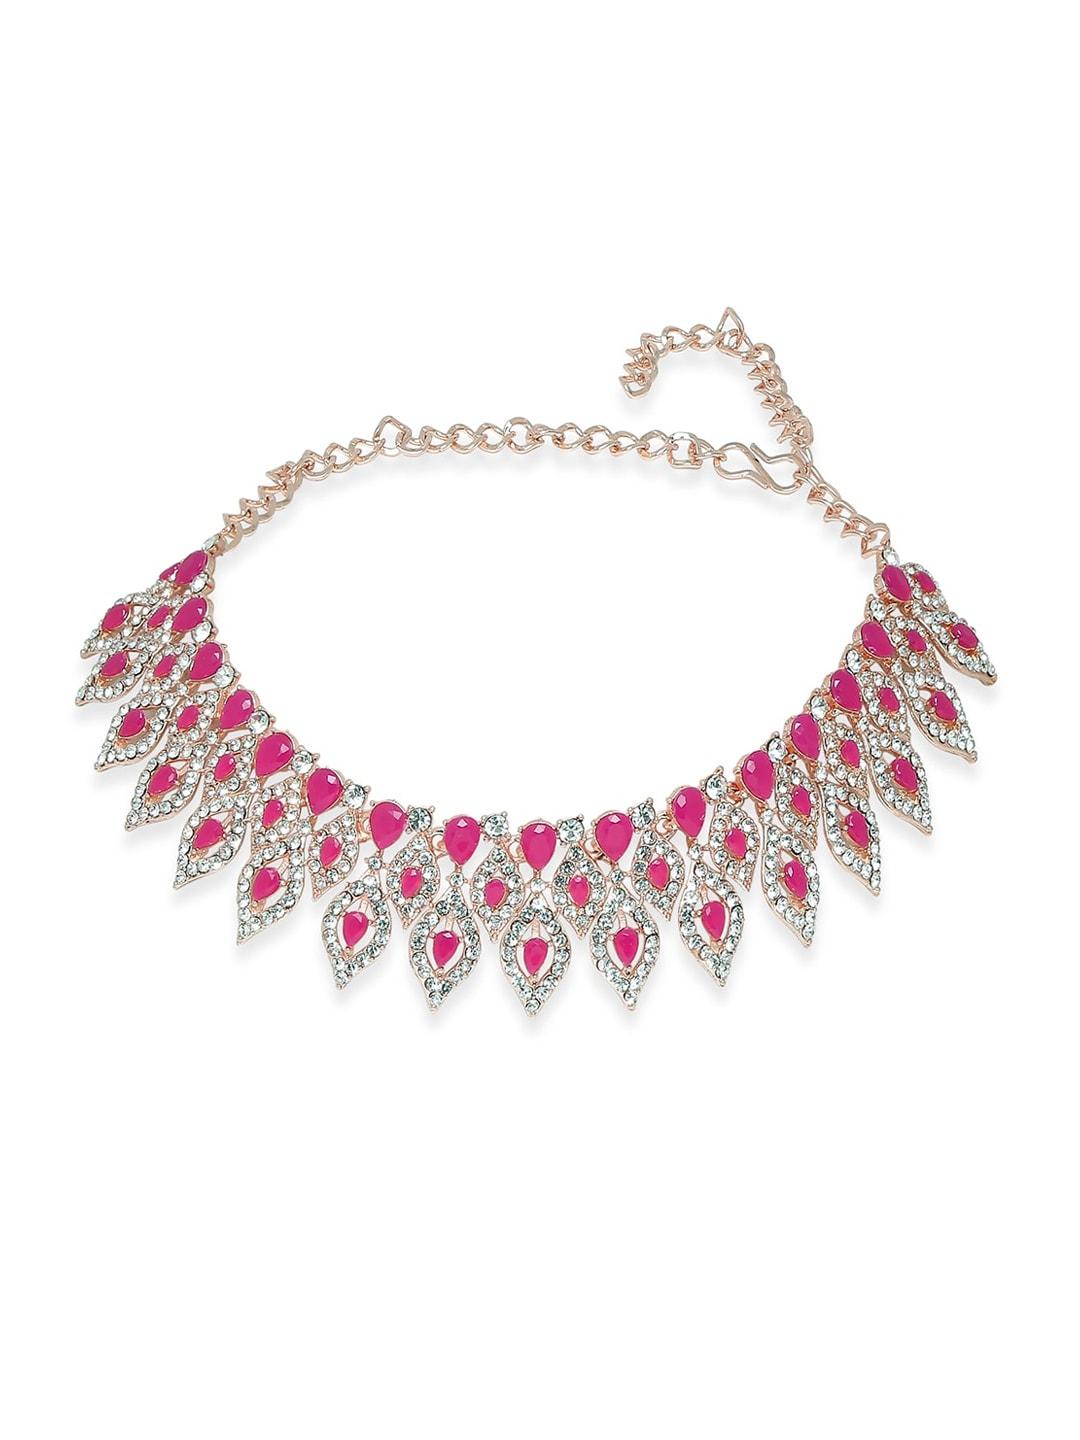 vatsalya creation rose gold-plated pink & white stone studded jewellery set